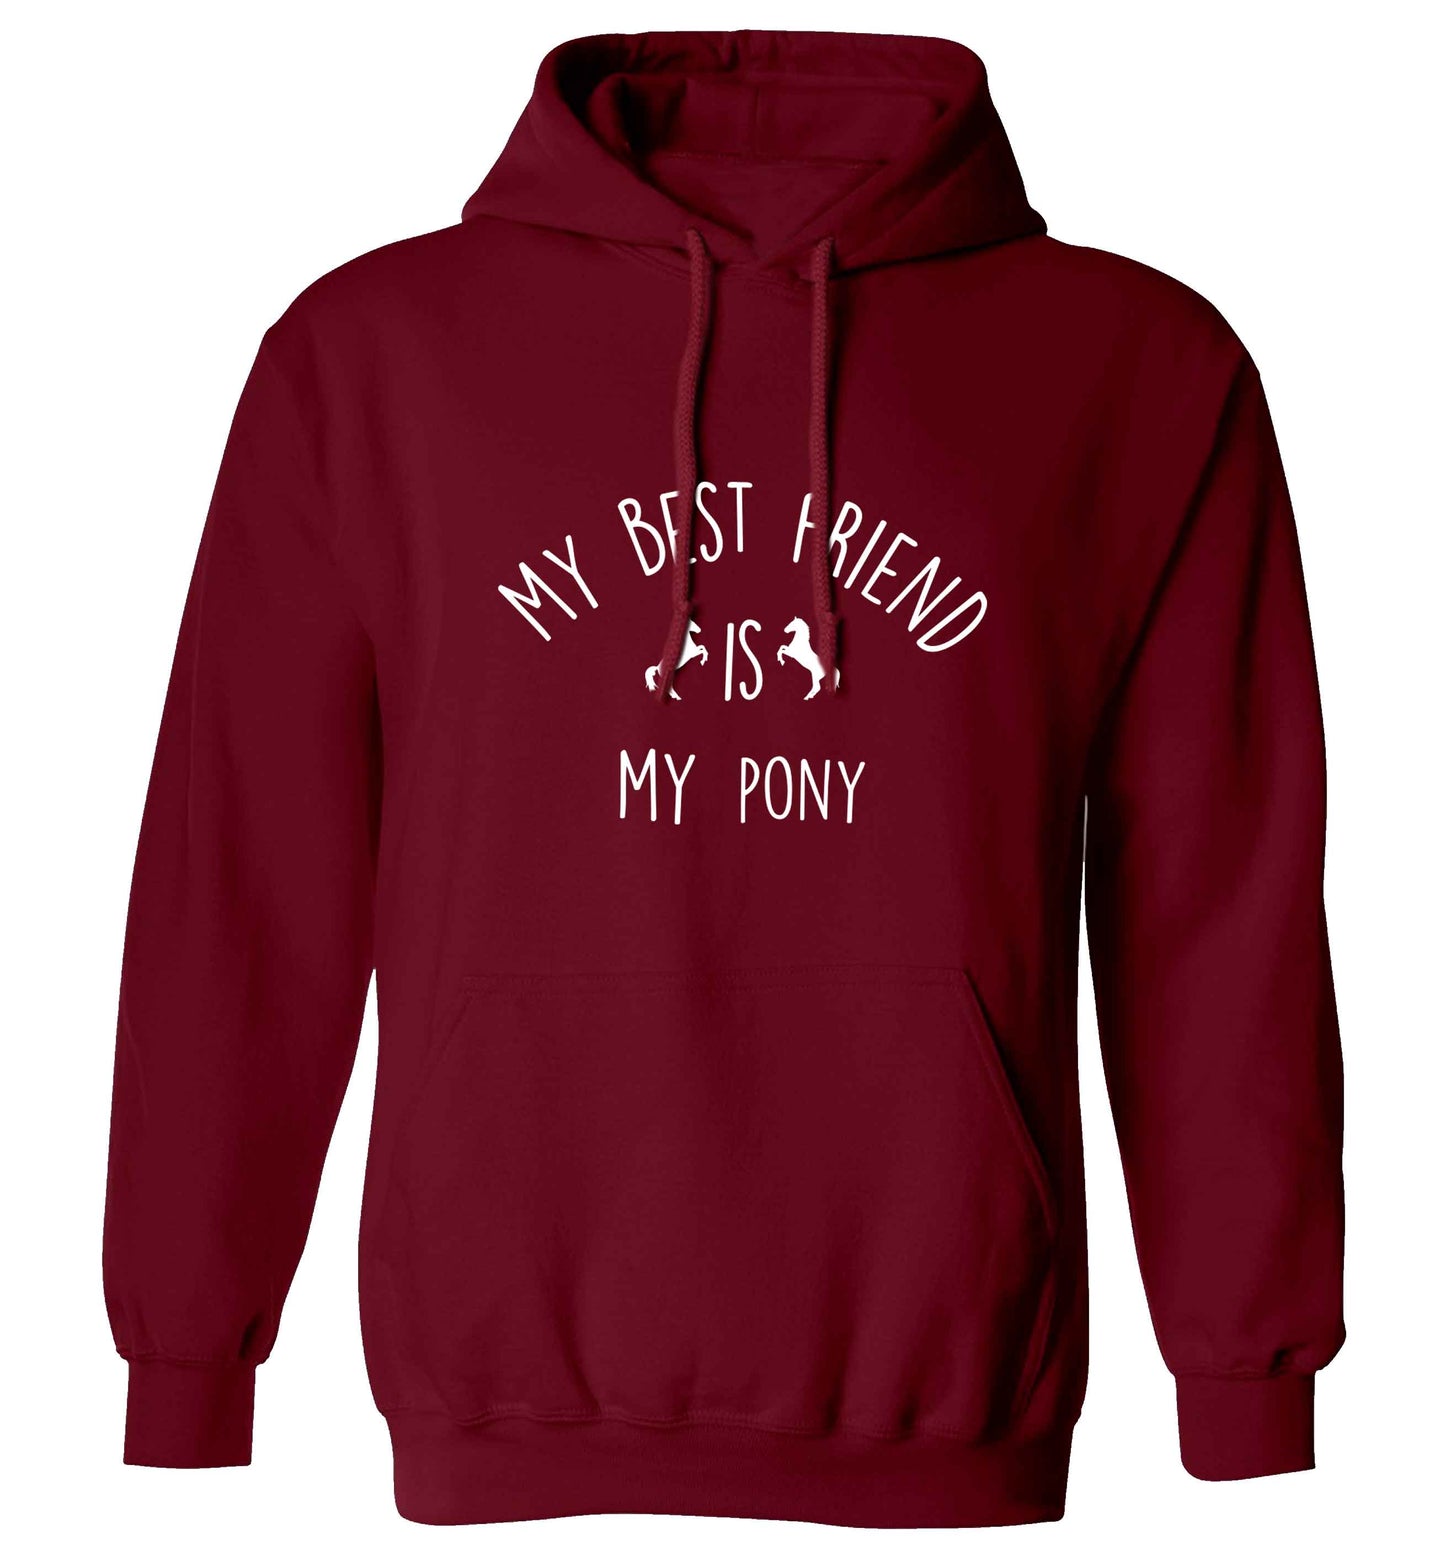 My best friend is my pony adults unisex maroon hoodie 2XL